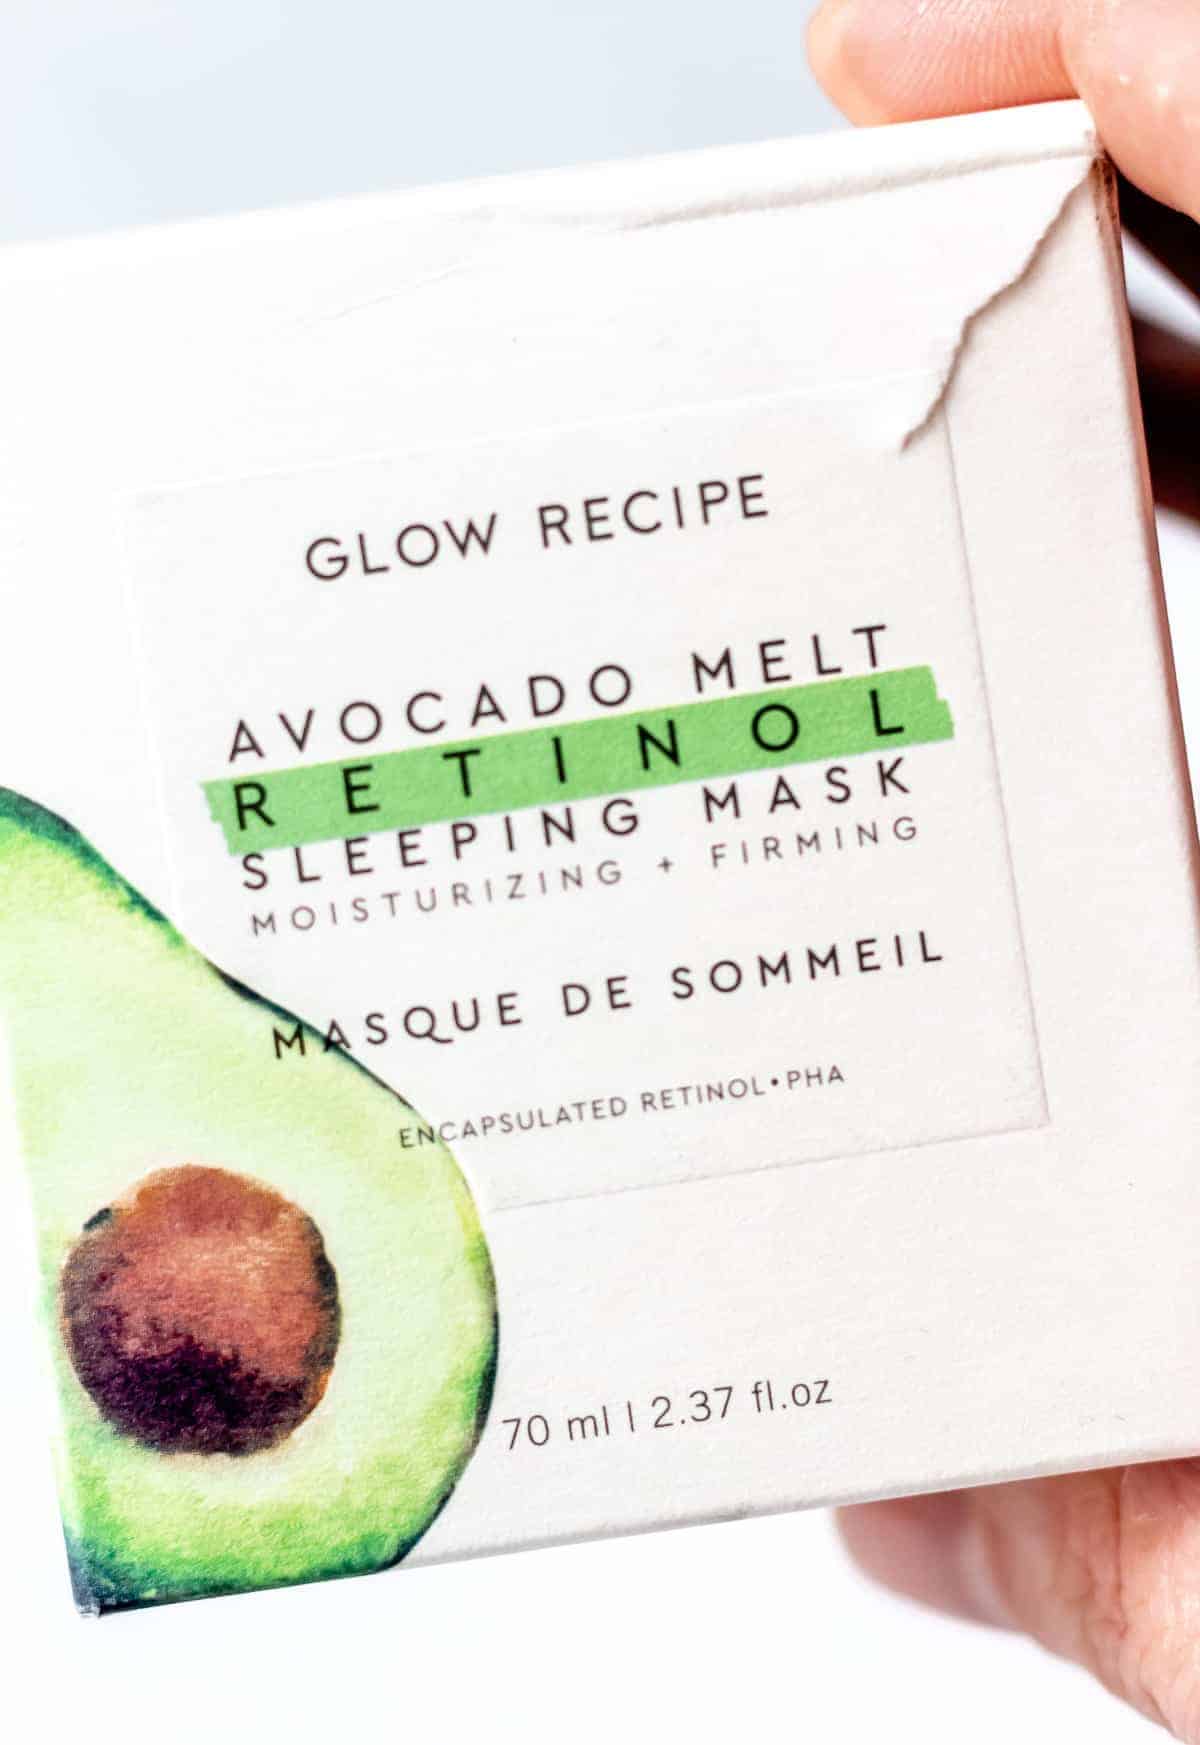 A box of glow recipe avocado melt retinol sleeping mask